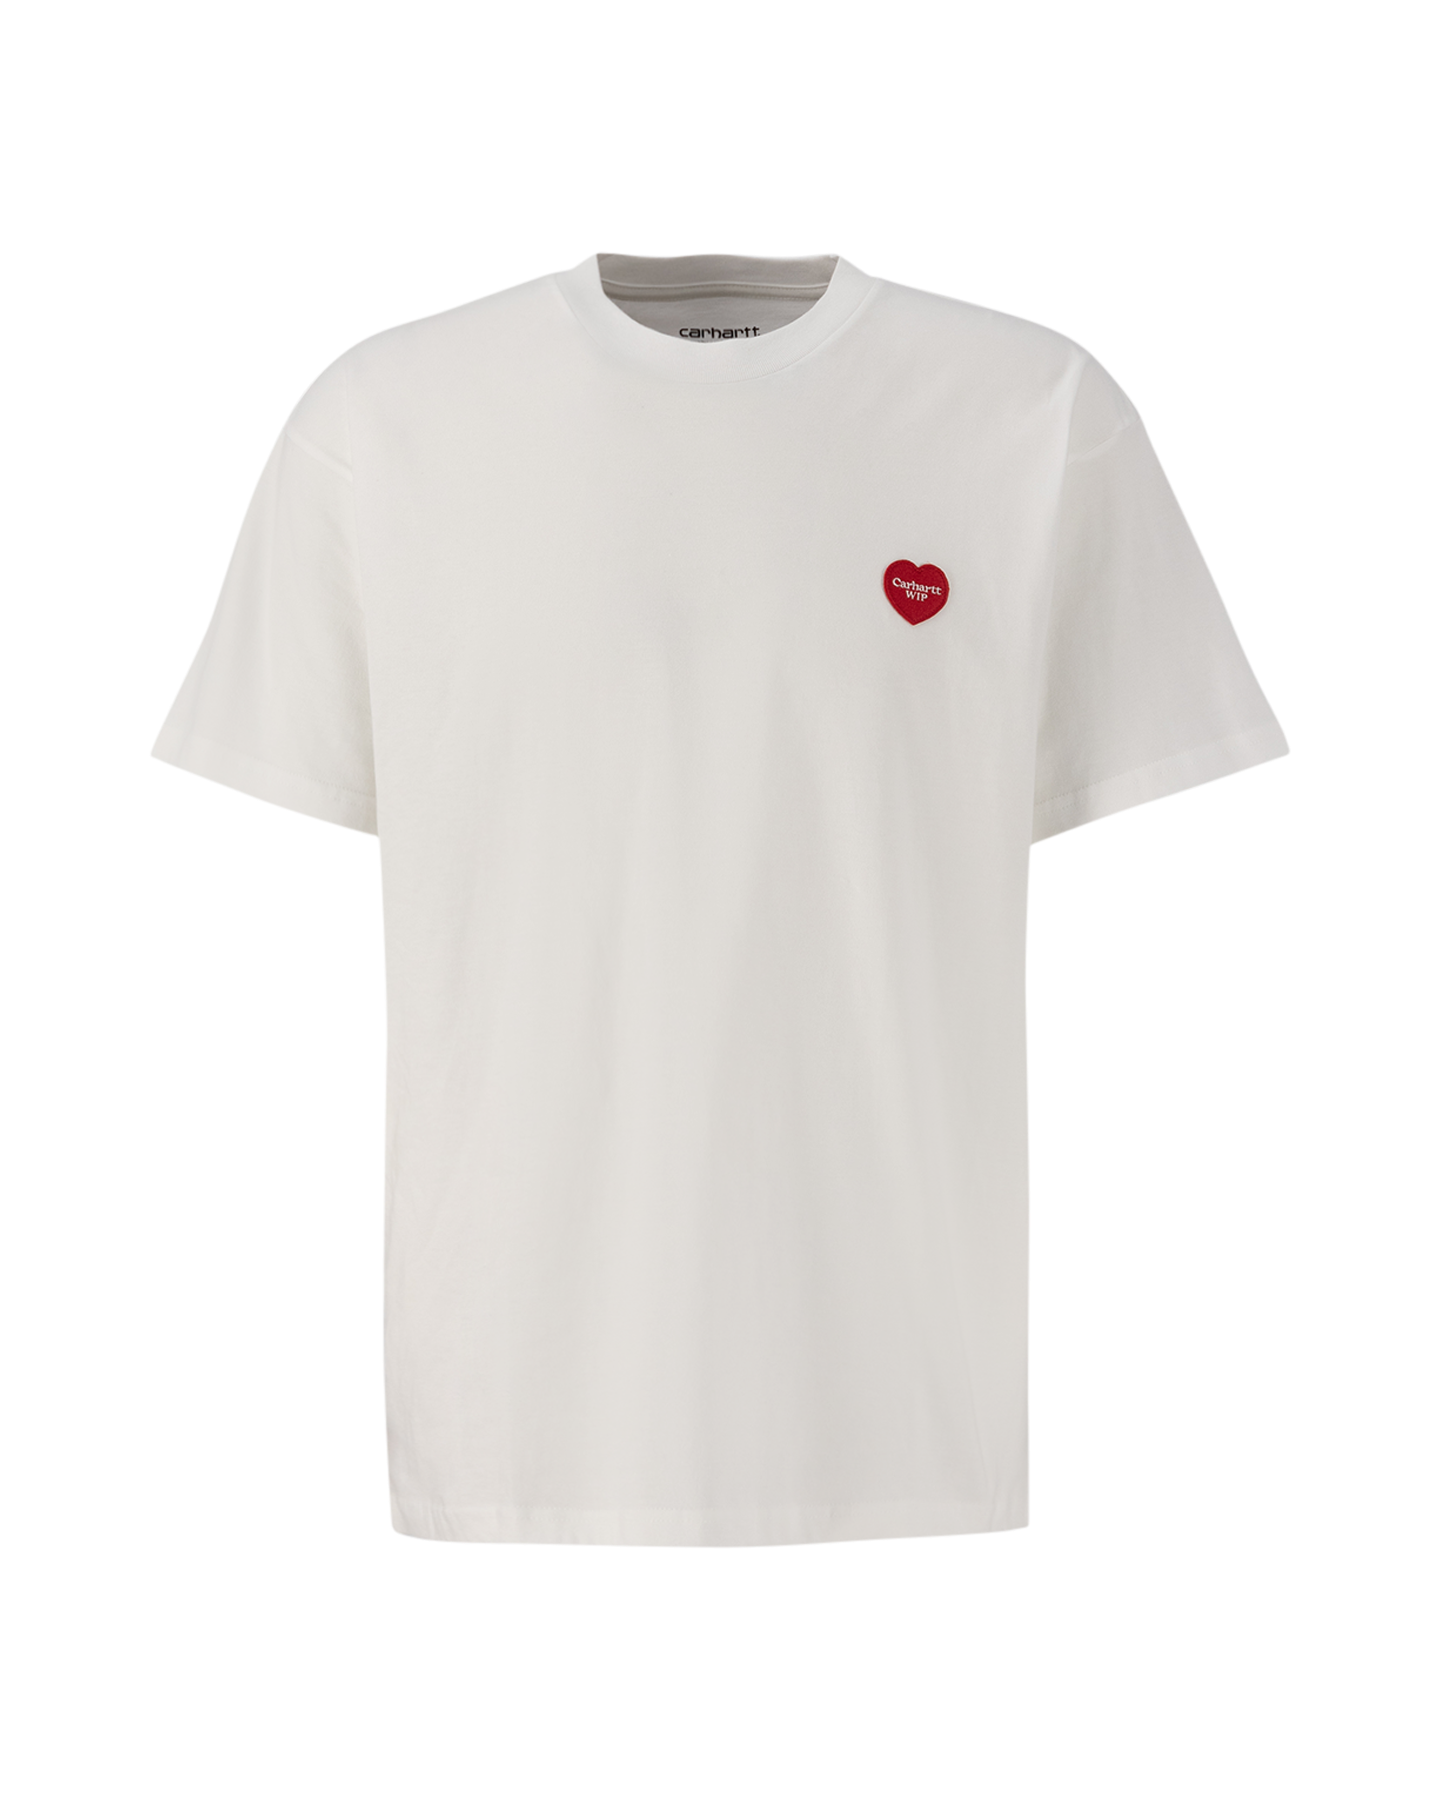 Carhartt WIP S/S Double Heart T-Shirt WIT 2